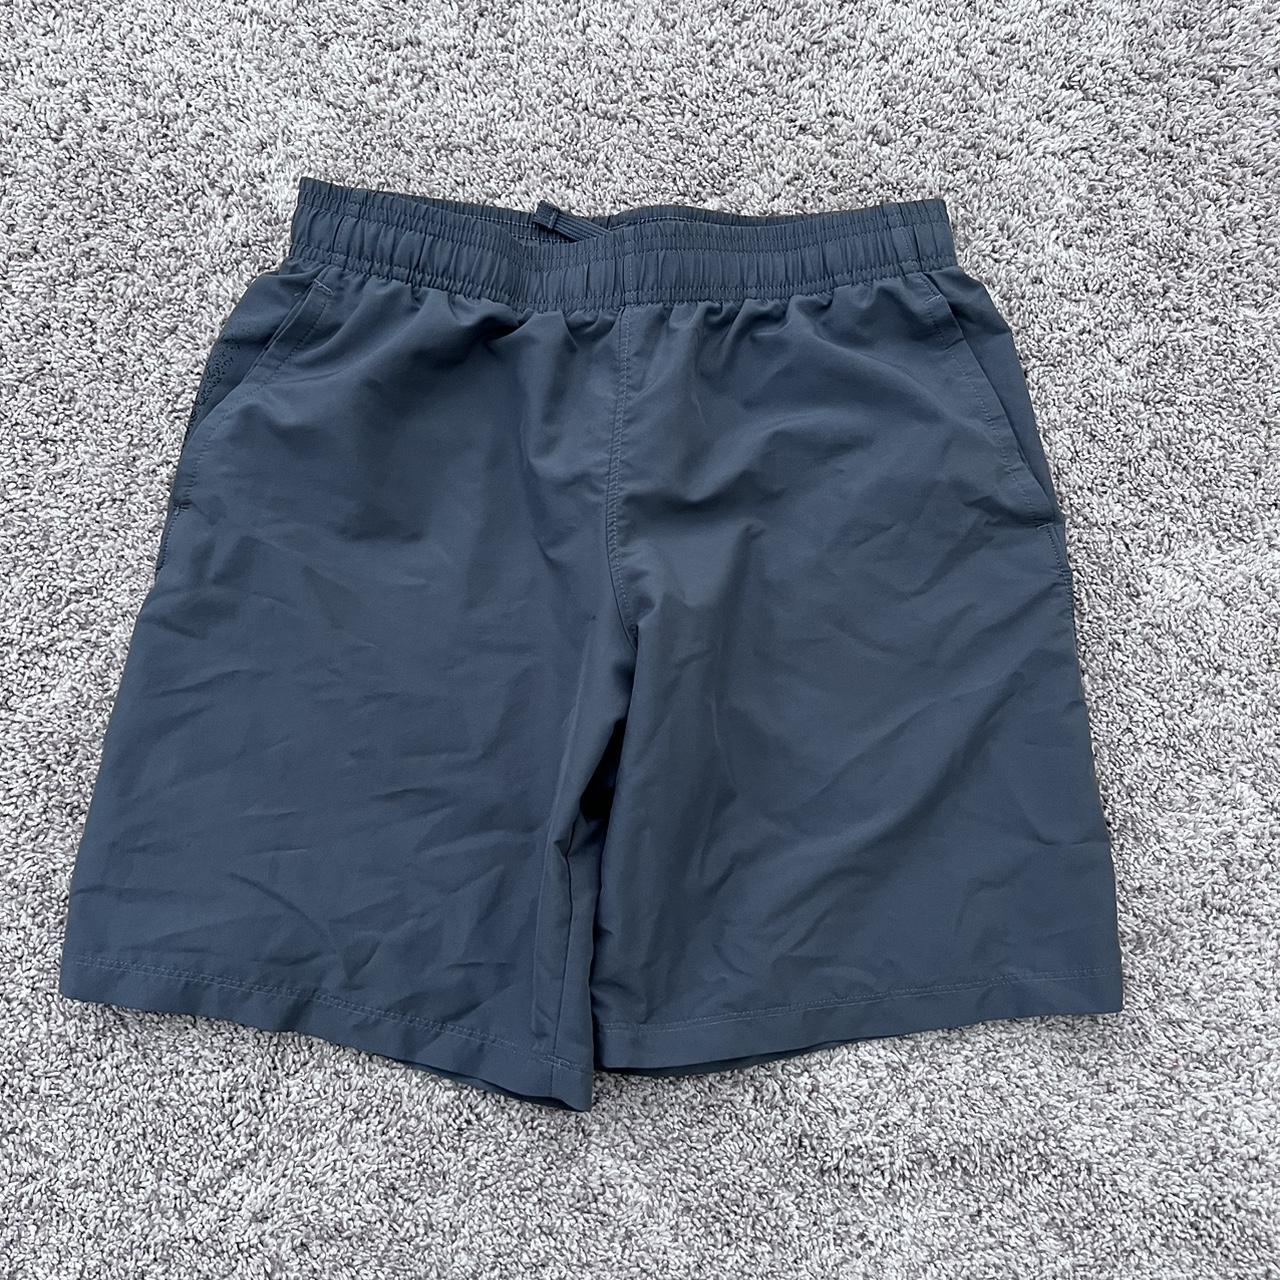 XS Under Armor Shorts - Depop